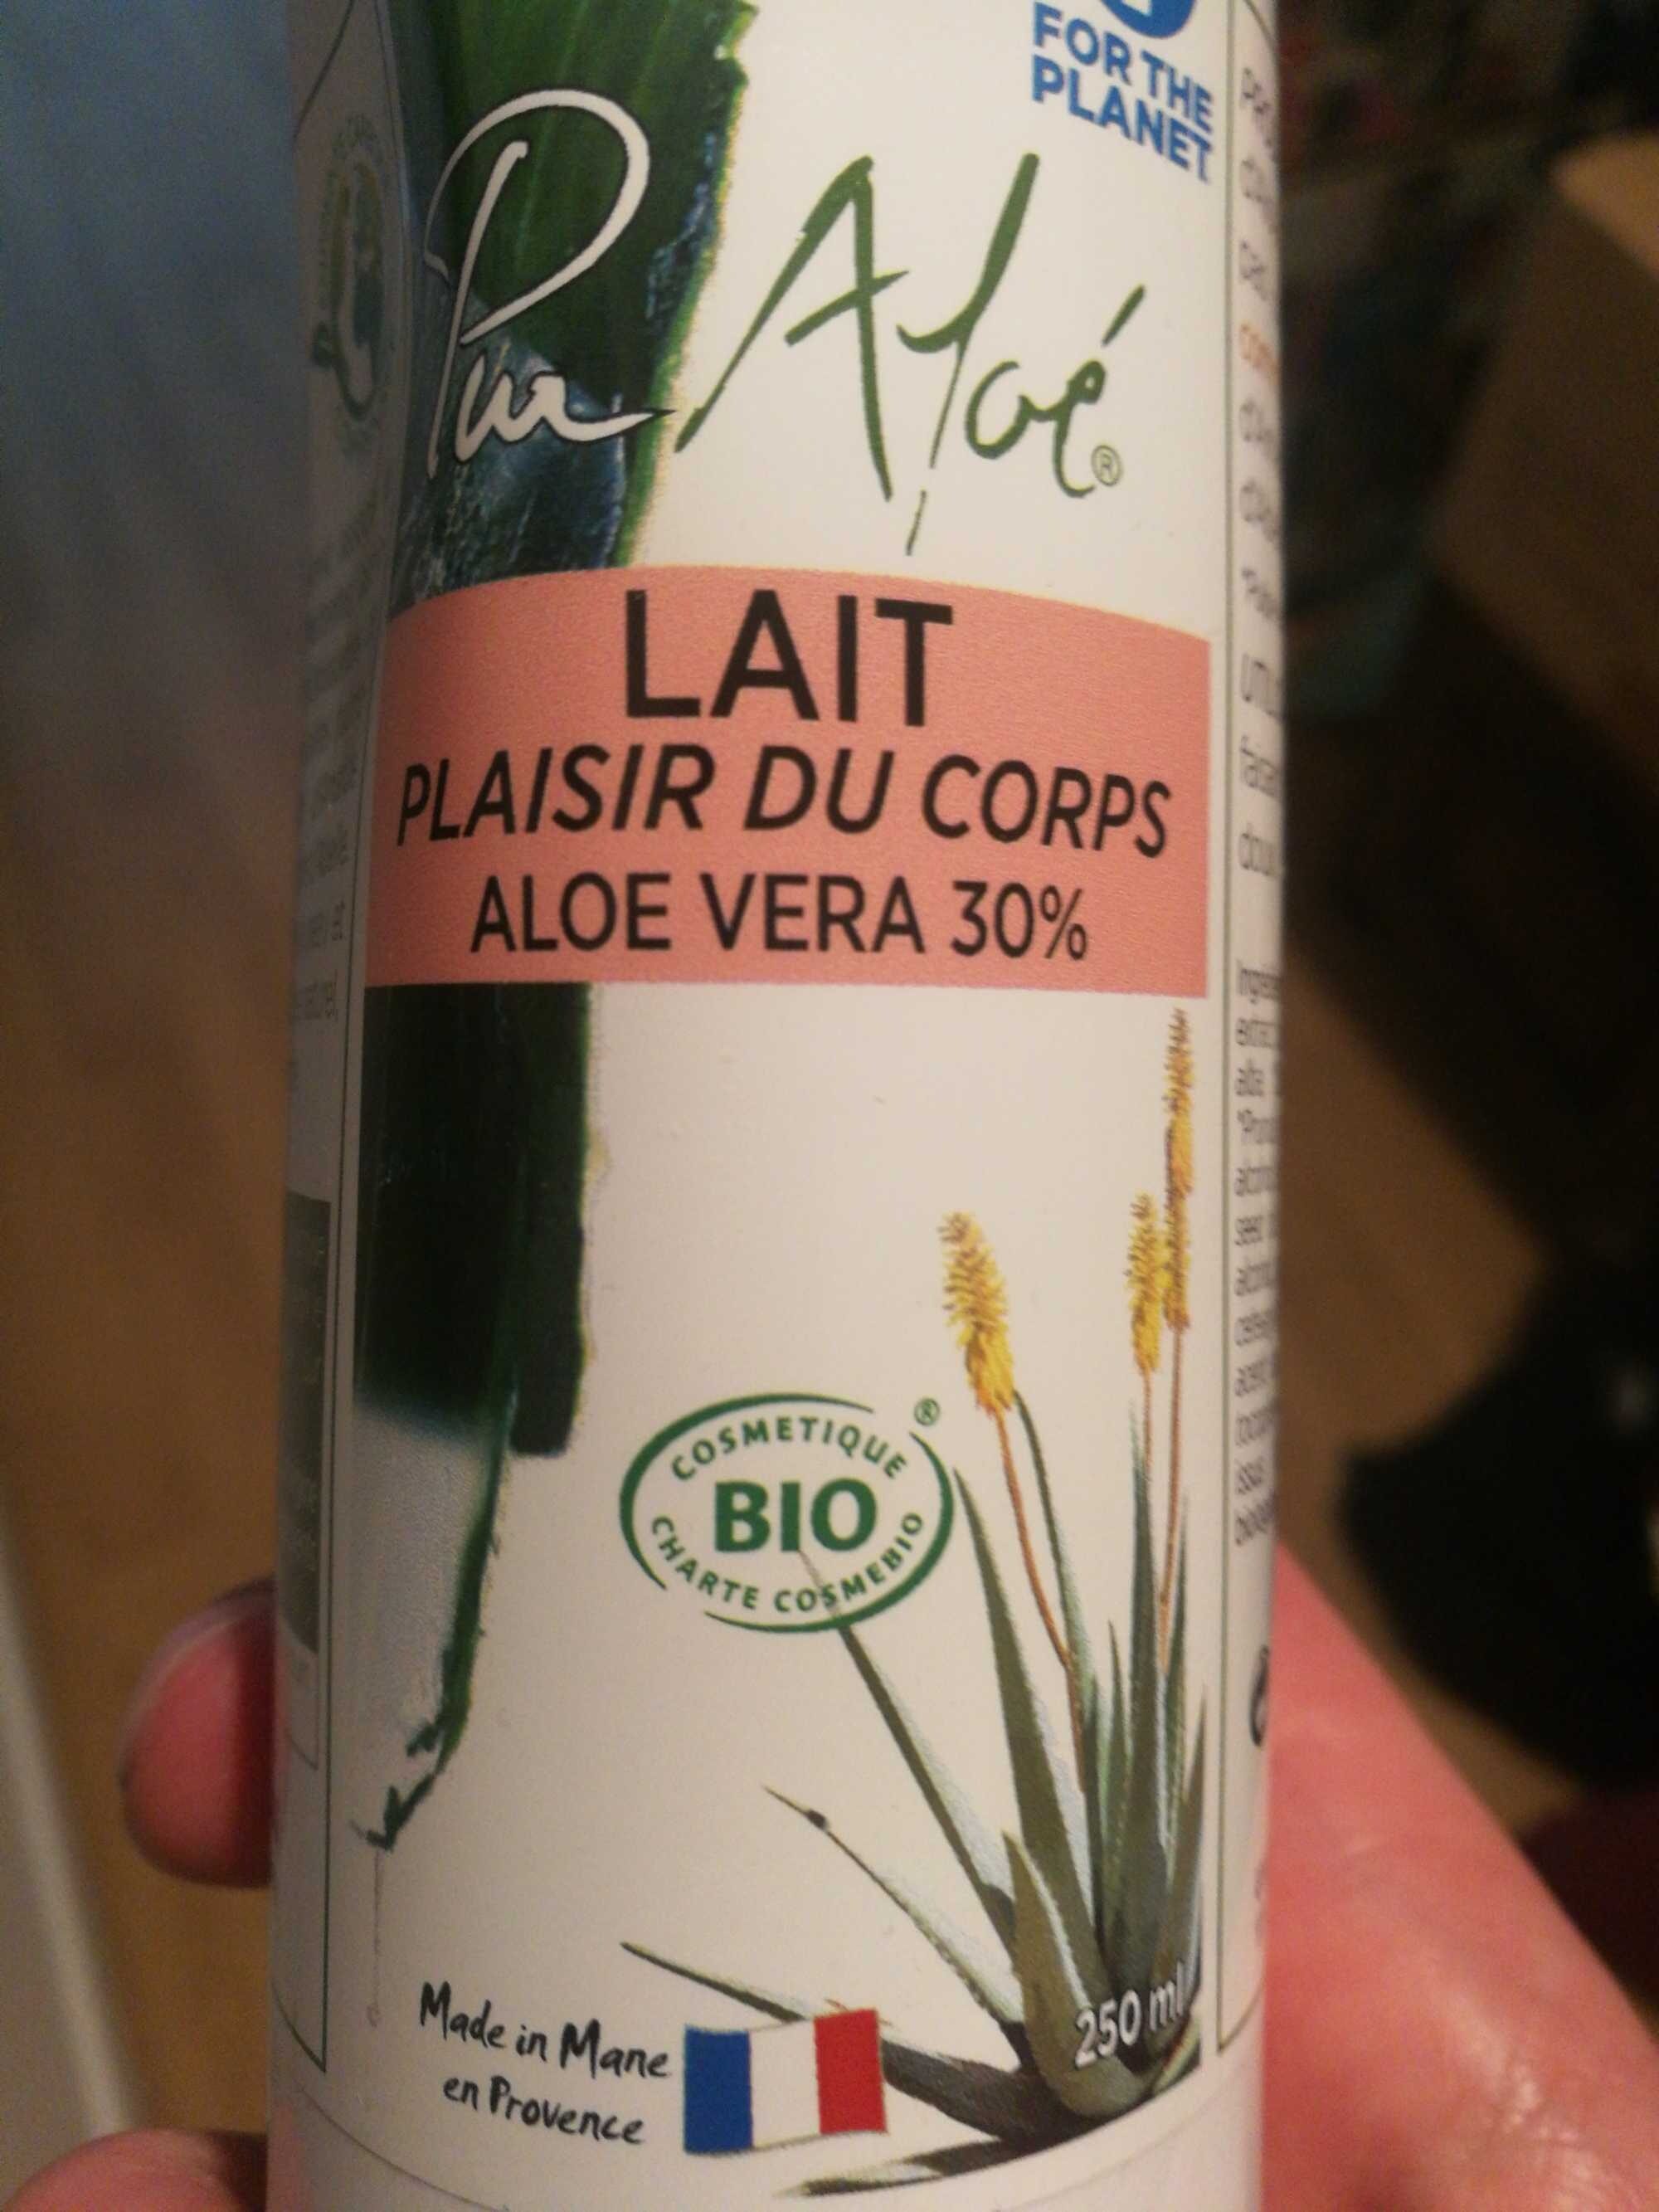 Lait plaisir du corps Aloe Vera 30% - نتاج - fr